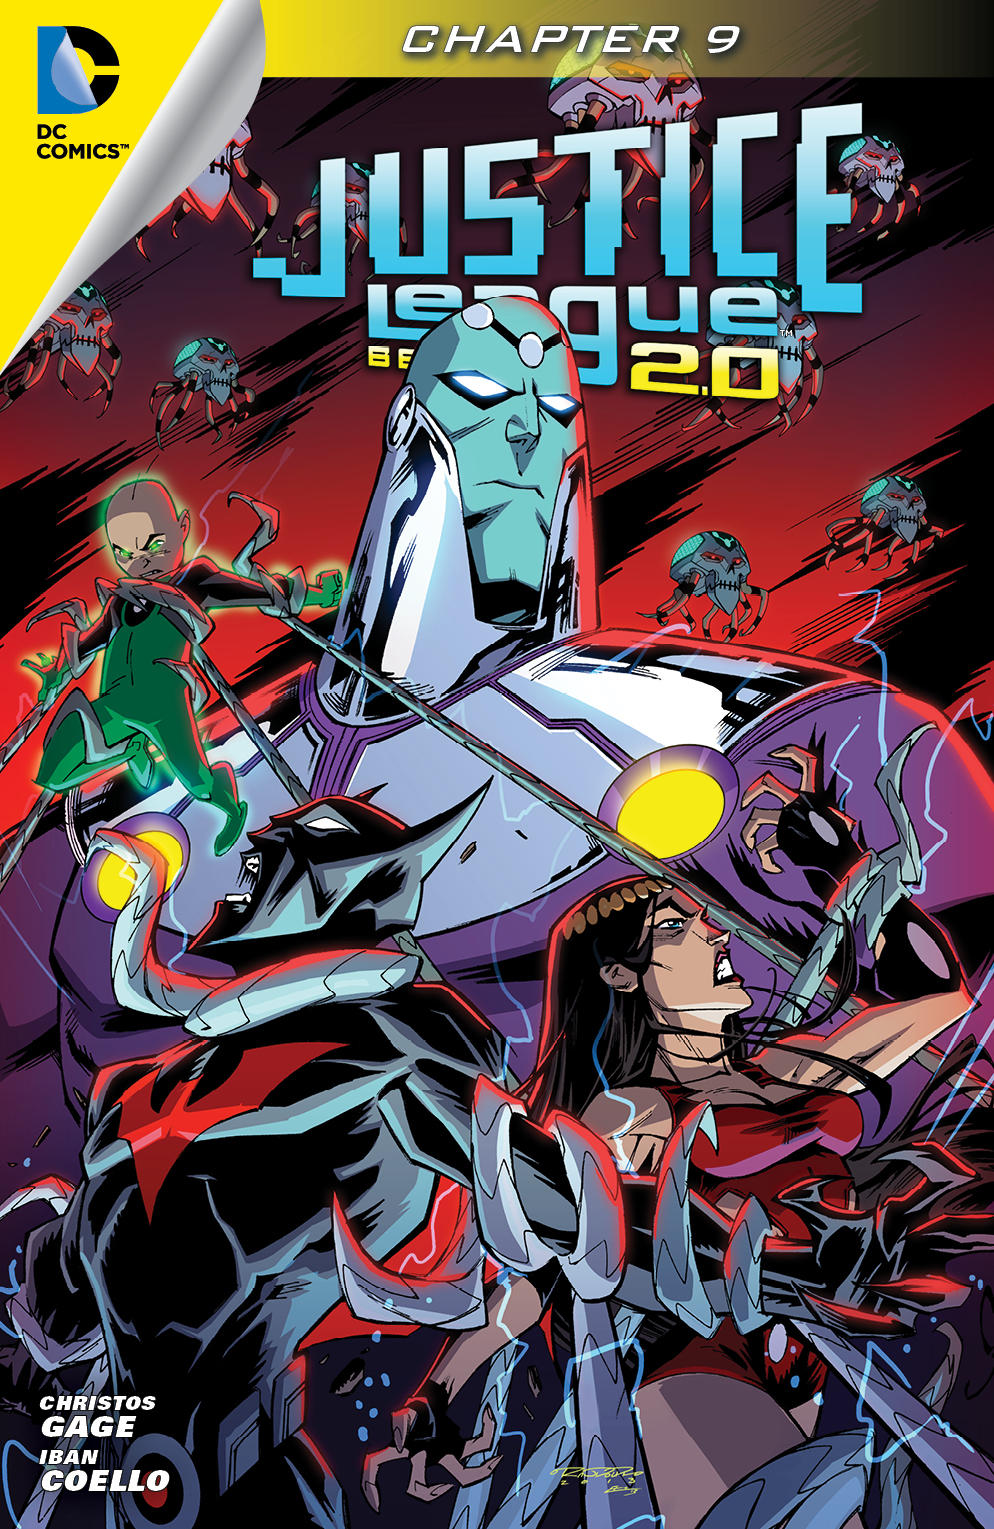 Justice League Beyond 2.0 #9 preview images